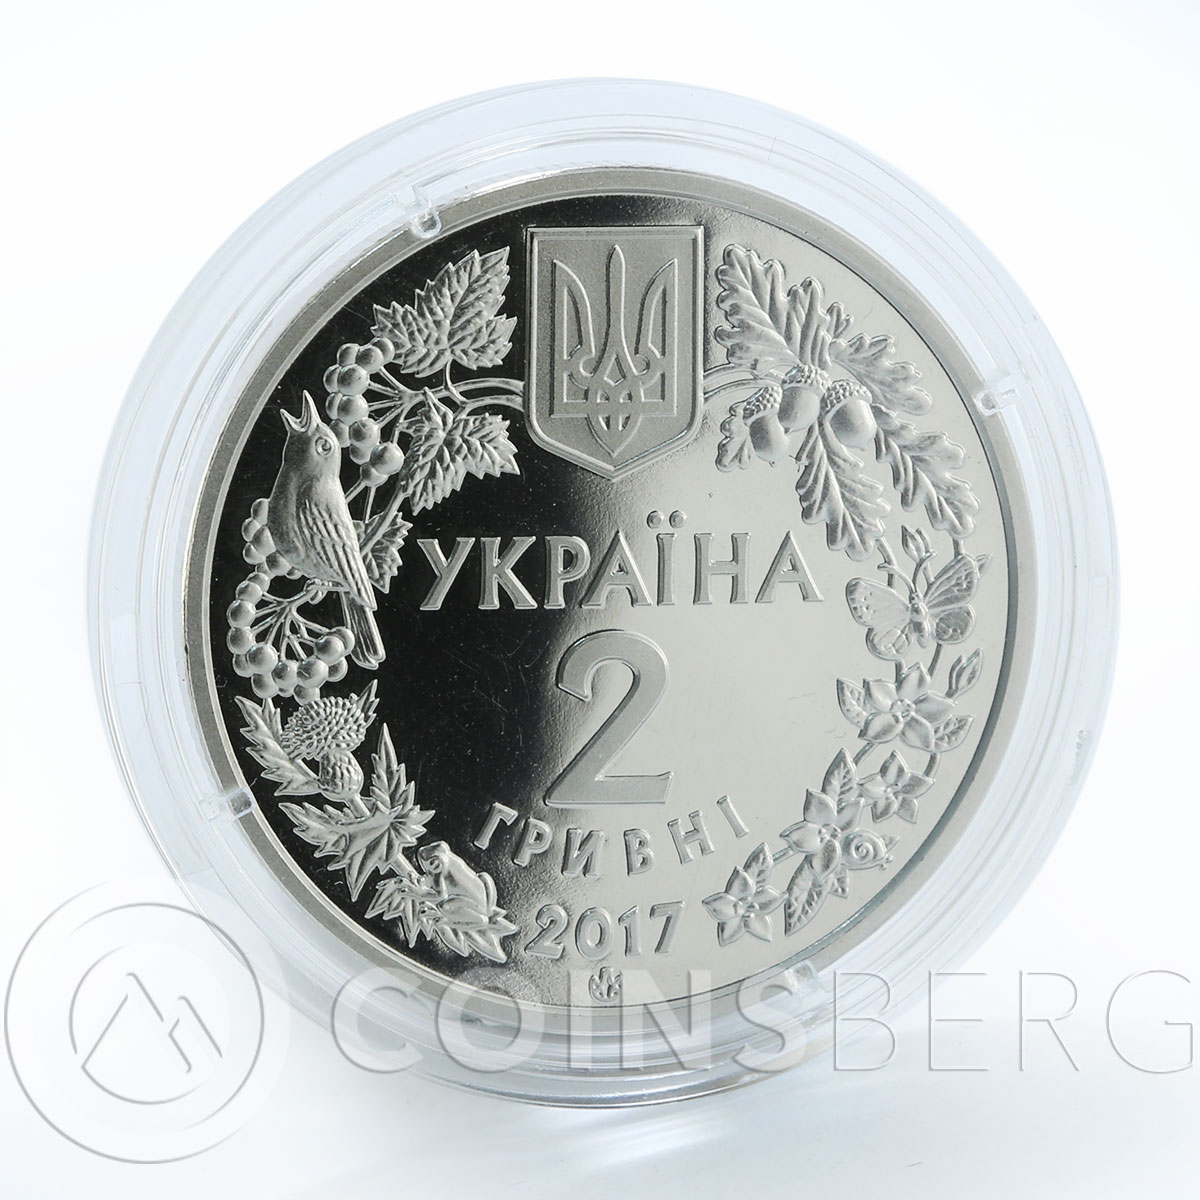 Ukraine 2 hryvnas Peregusna Flora and Fauna of Ukraine coin 2017